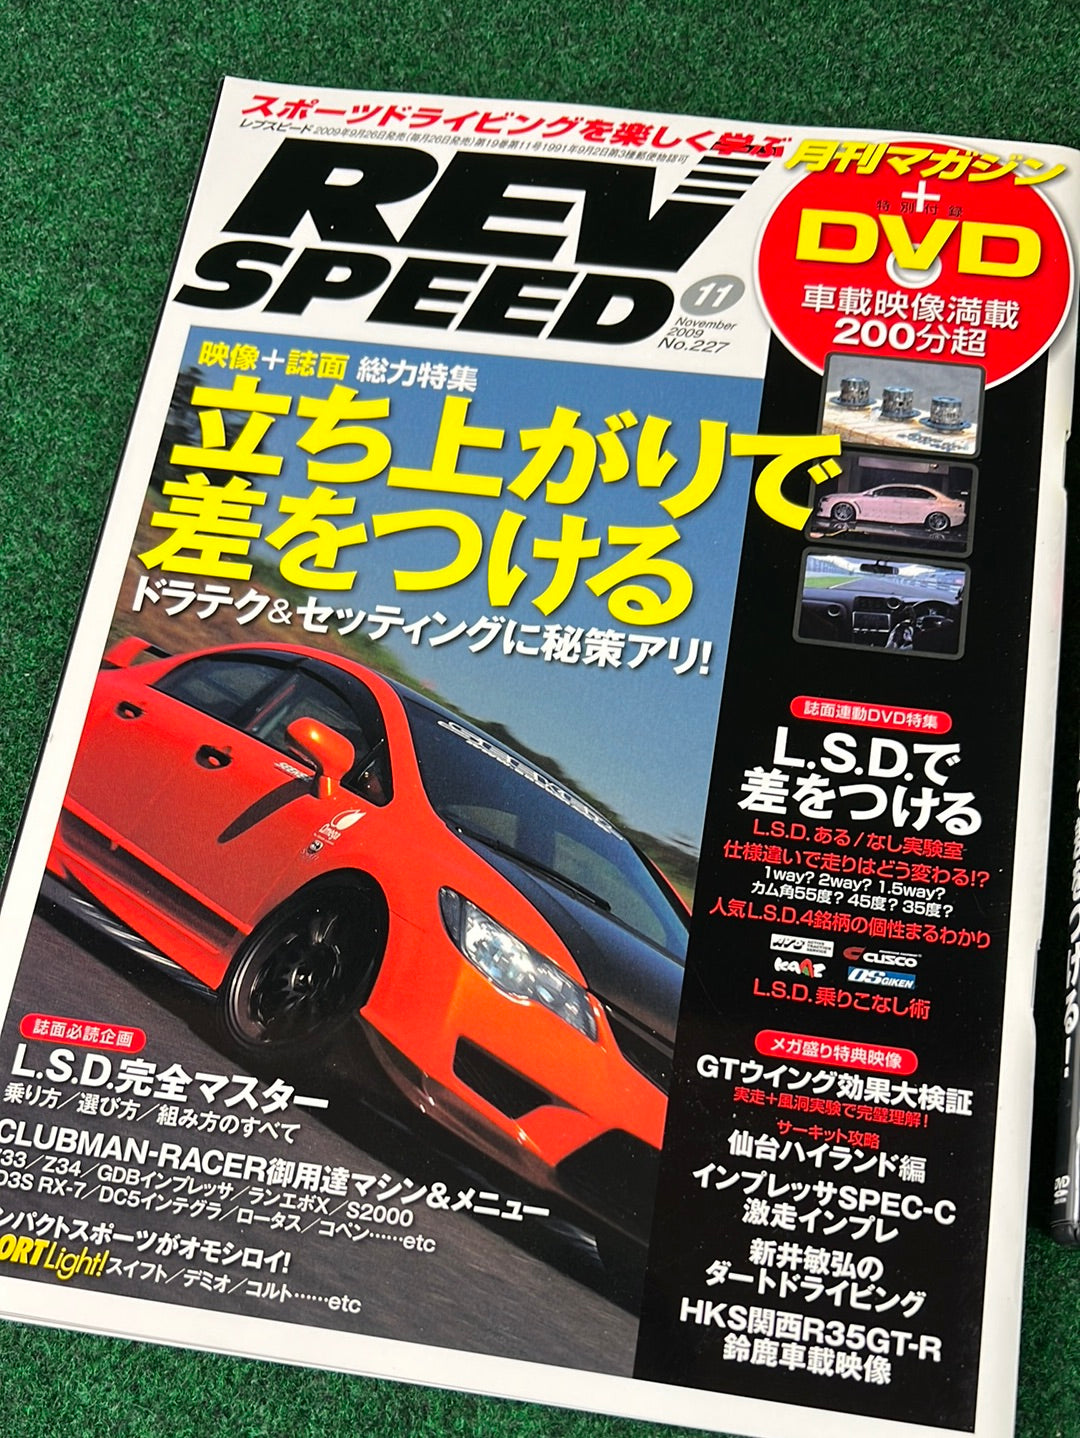 REVSPEED Magazine & DVD - Vol. 227 November 2009